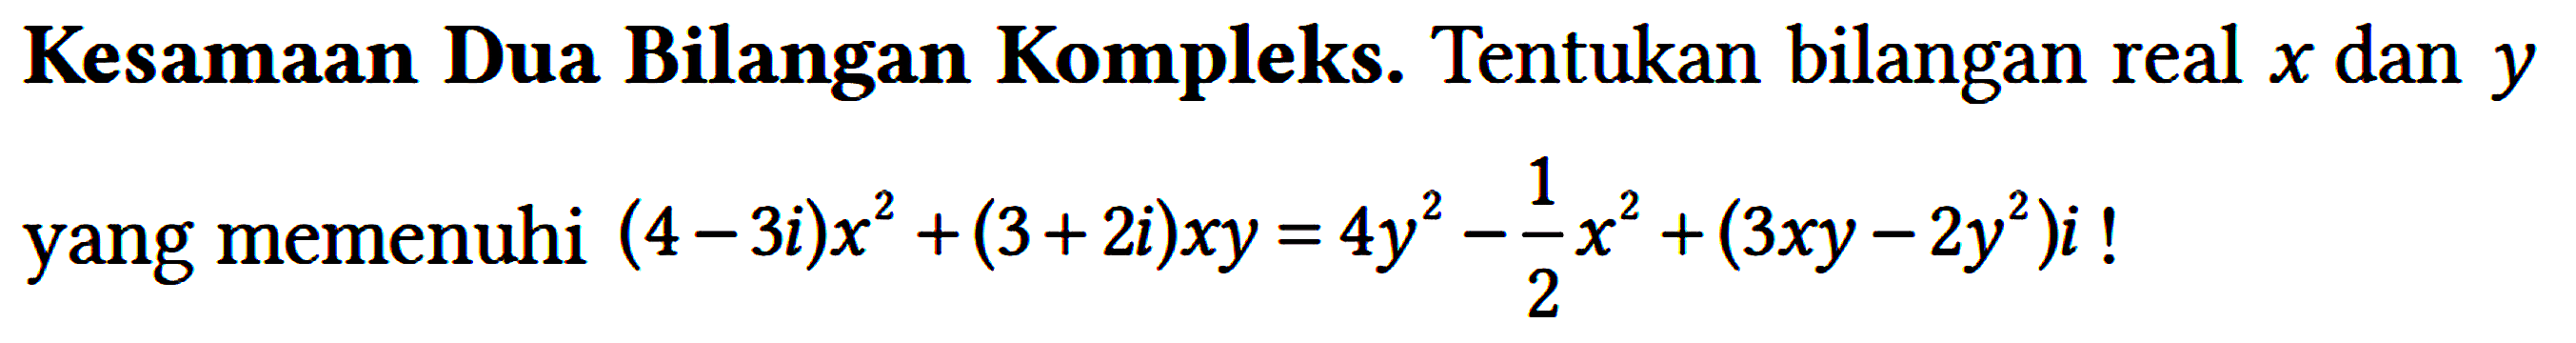 Kesamaan Dua Bilangan Kompleks. Tentukan bilangan real x dan y yang memenuhi (4 - 3i) x^2 + (3 + 2i) xy = 4 y^2 - 1/2 x^2 + (3xy - 2y^2) i!